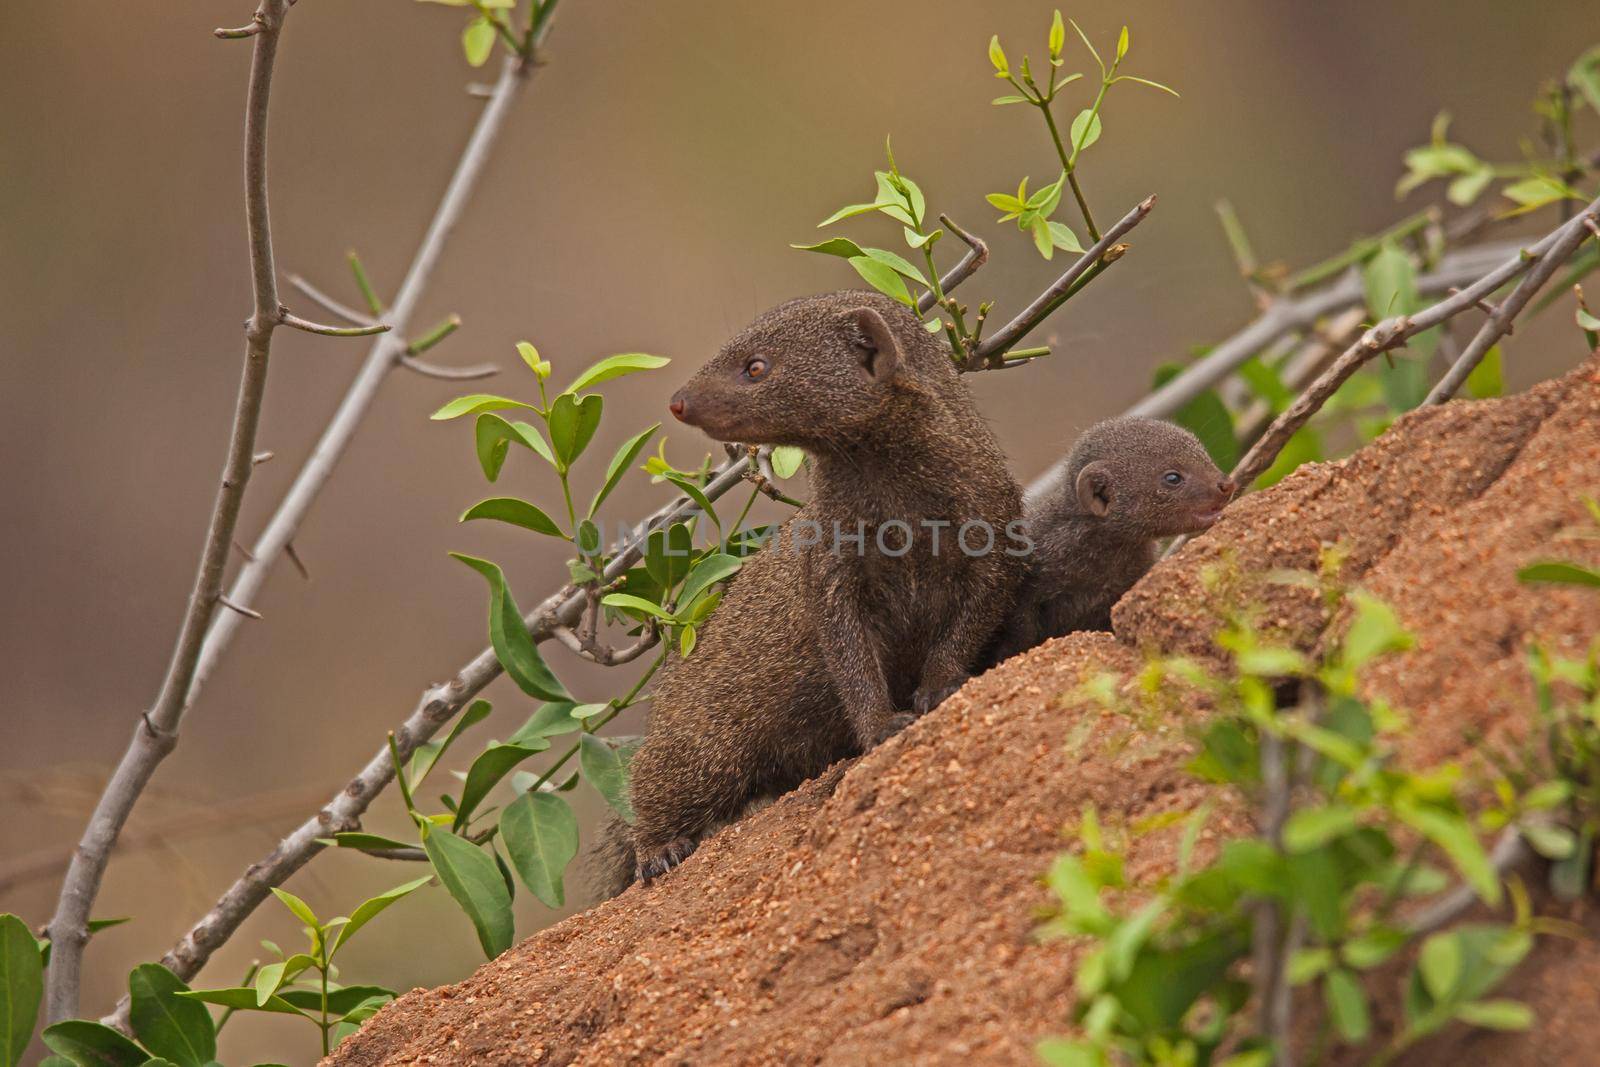 Dwarf Mongoose (Helogale parvula) 13808 by kobus_peche